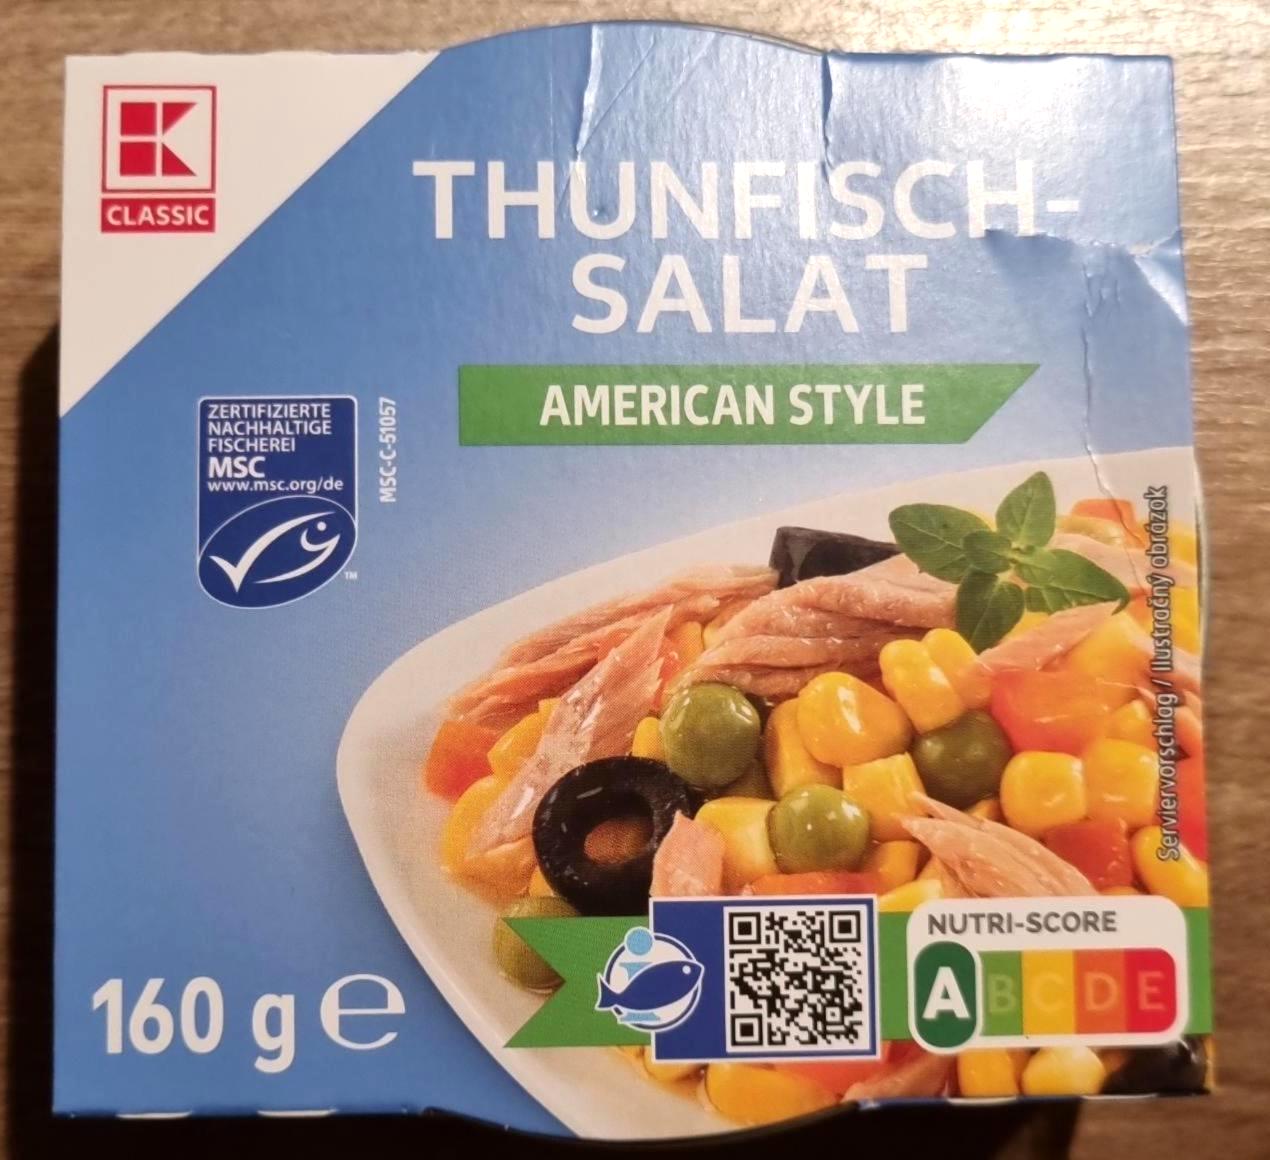 Képek - Thunfish salat American style K-Classic